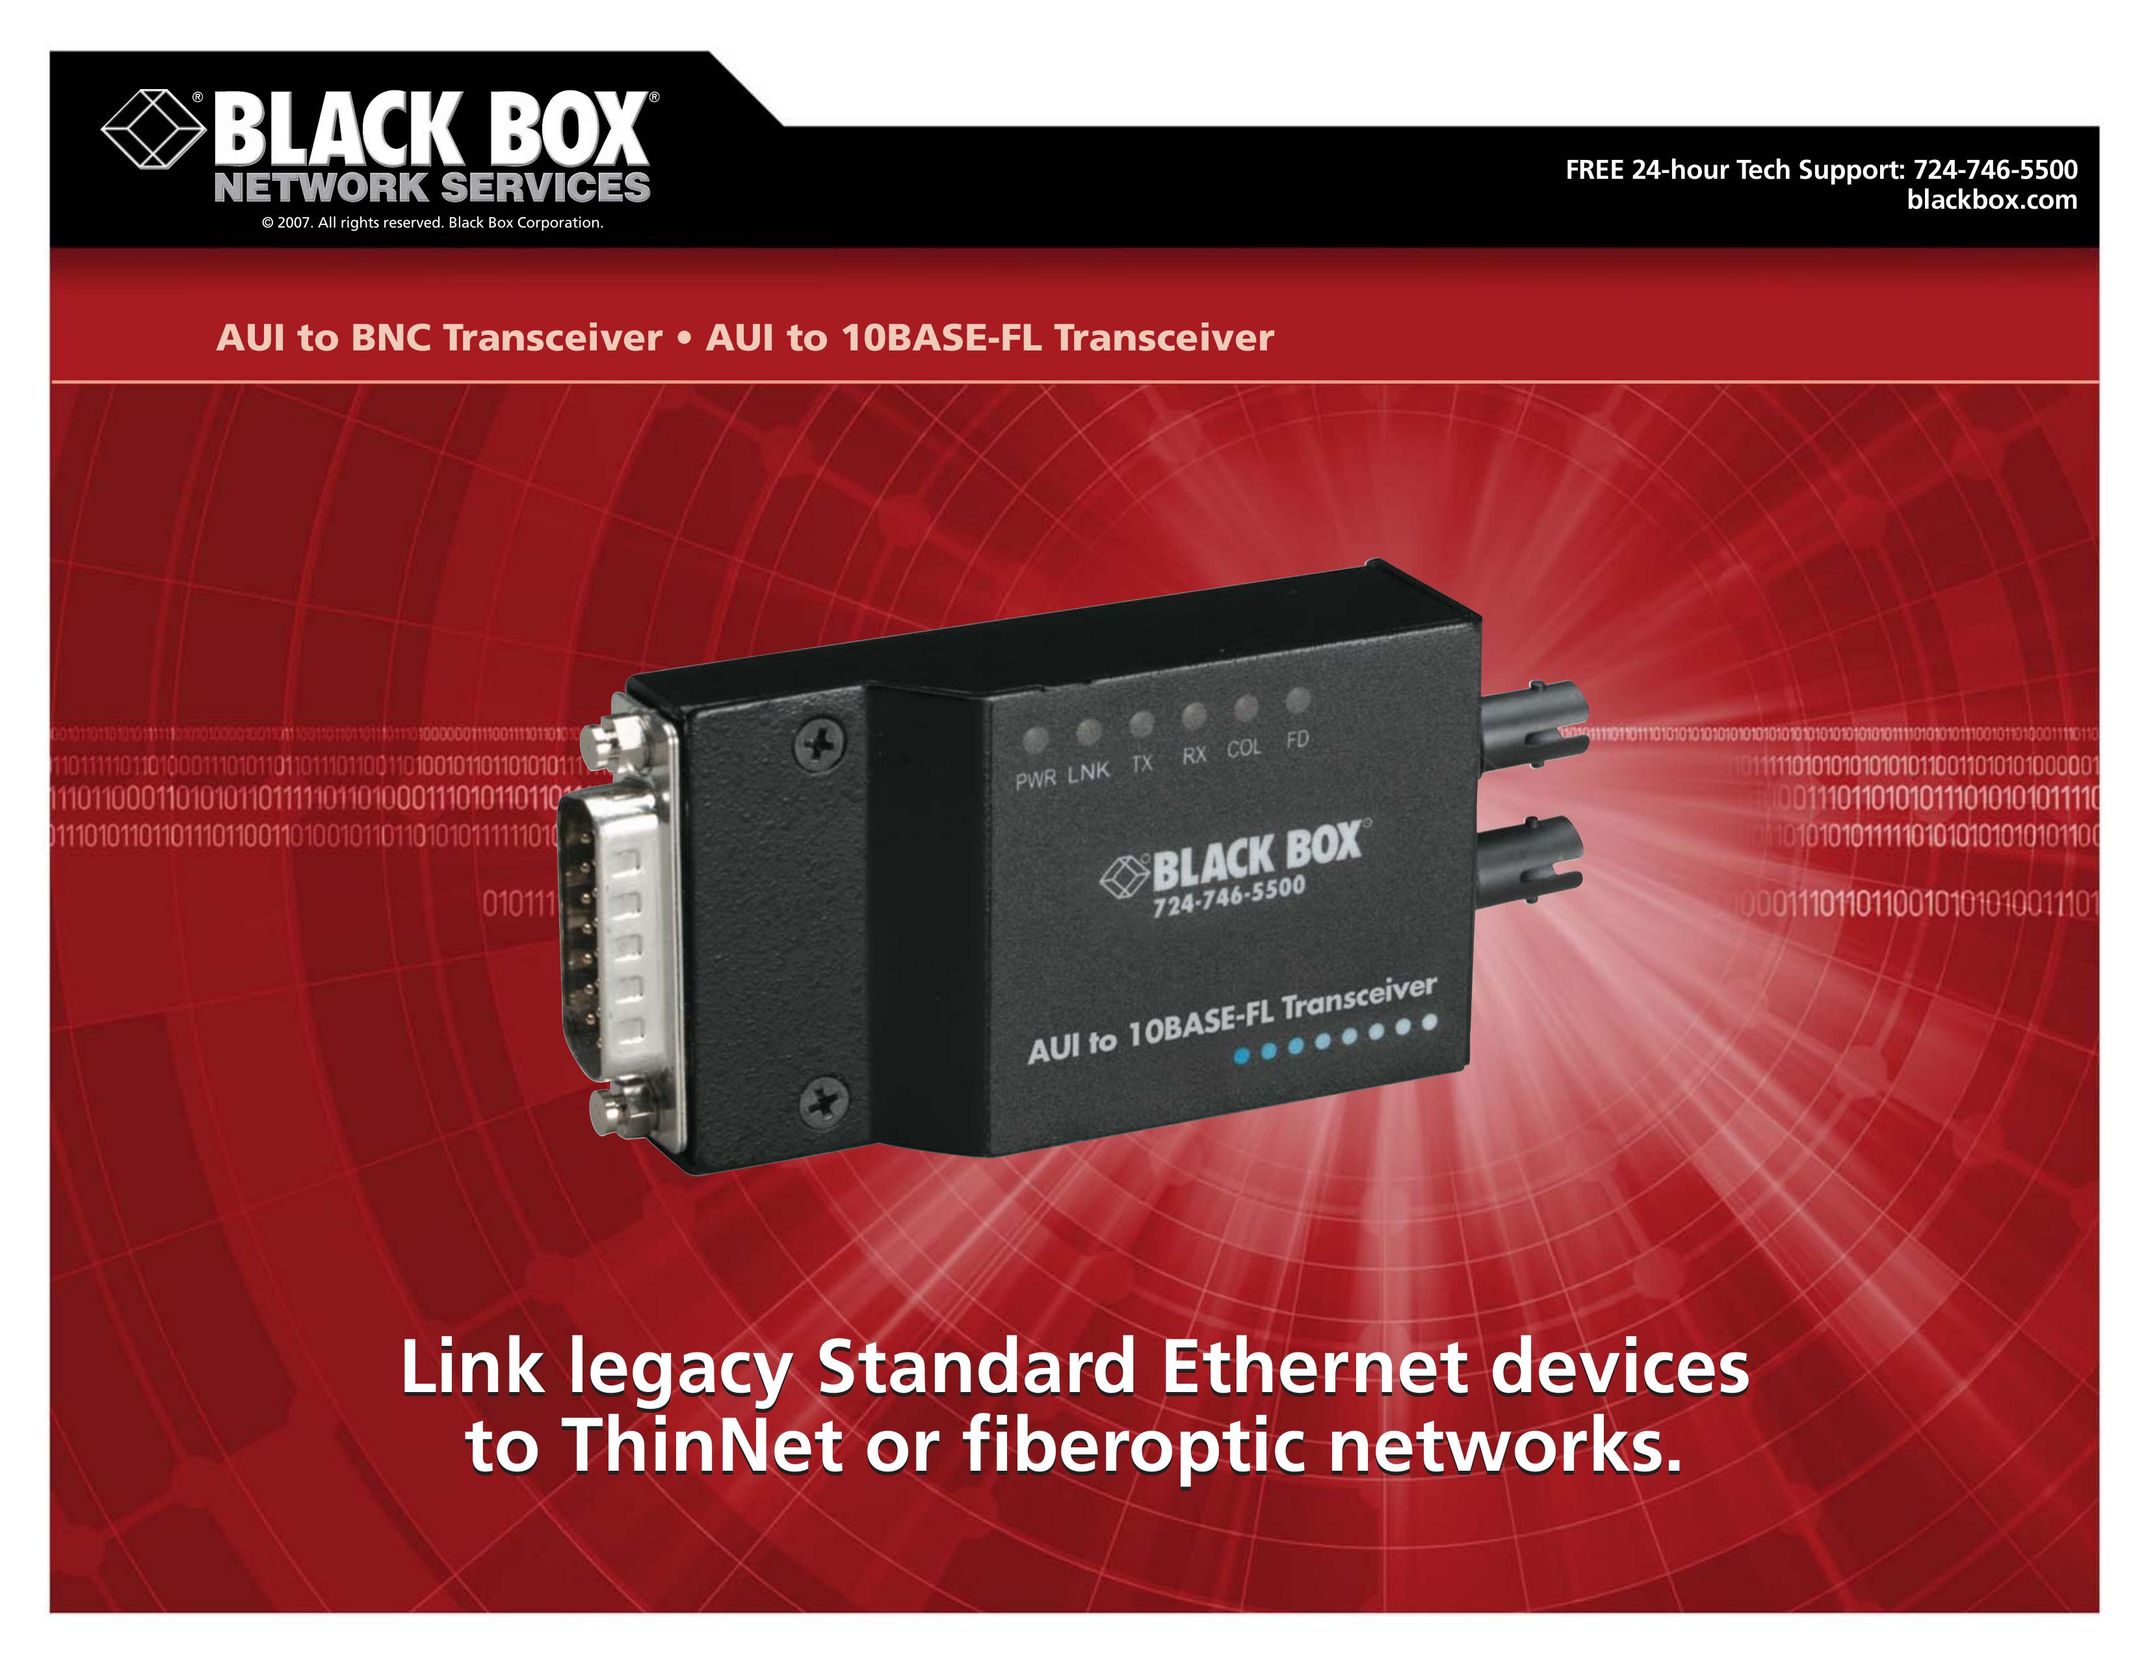 Black Box 724-746-5500 Satellite TV System User Manual